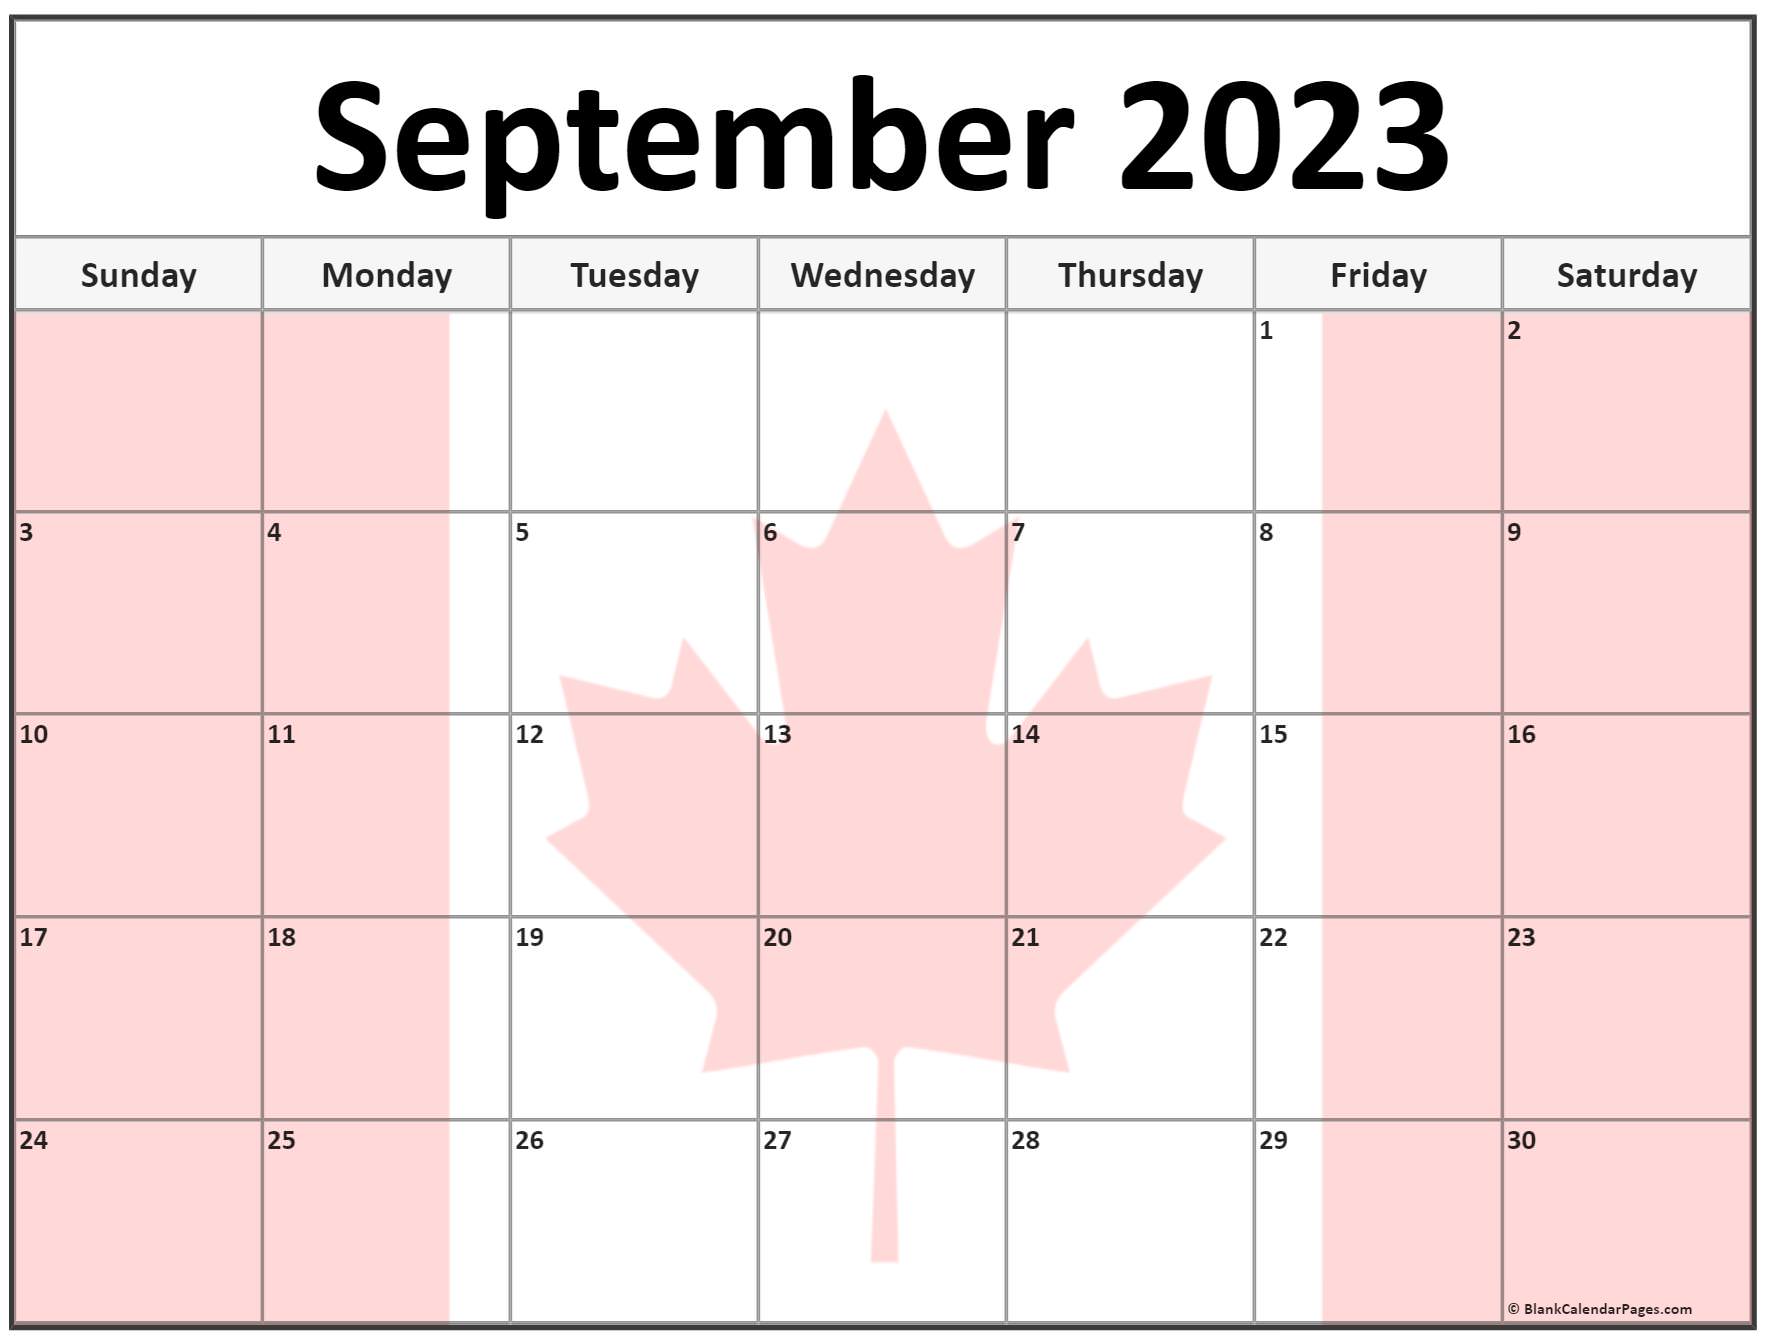 2023-canada-holidays-2023-calendar-2023-canada-calendar-with-holidays